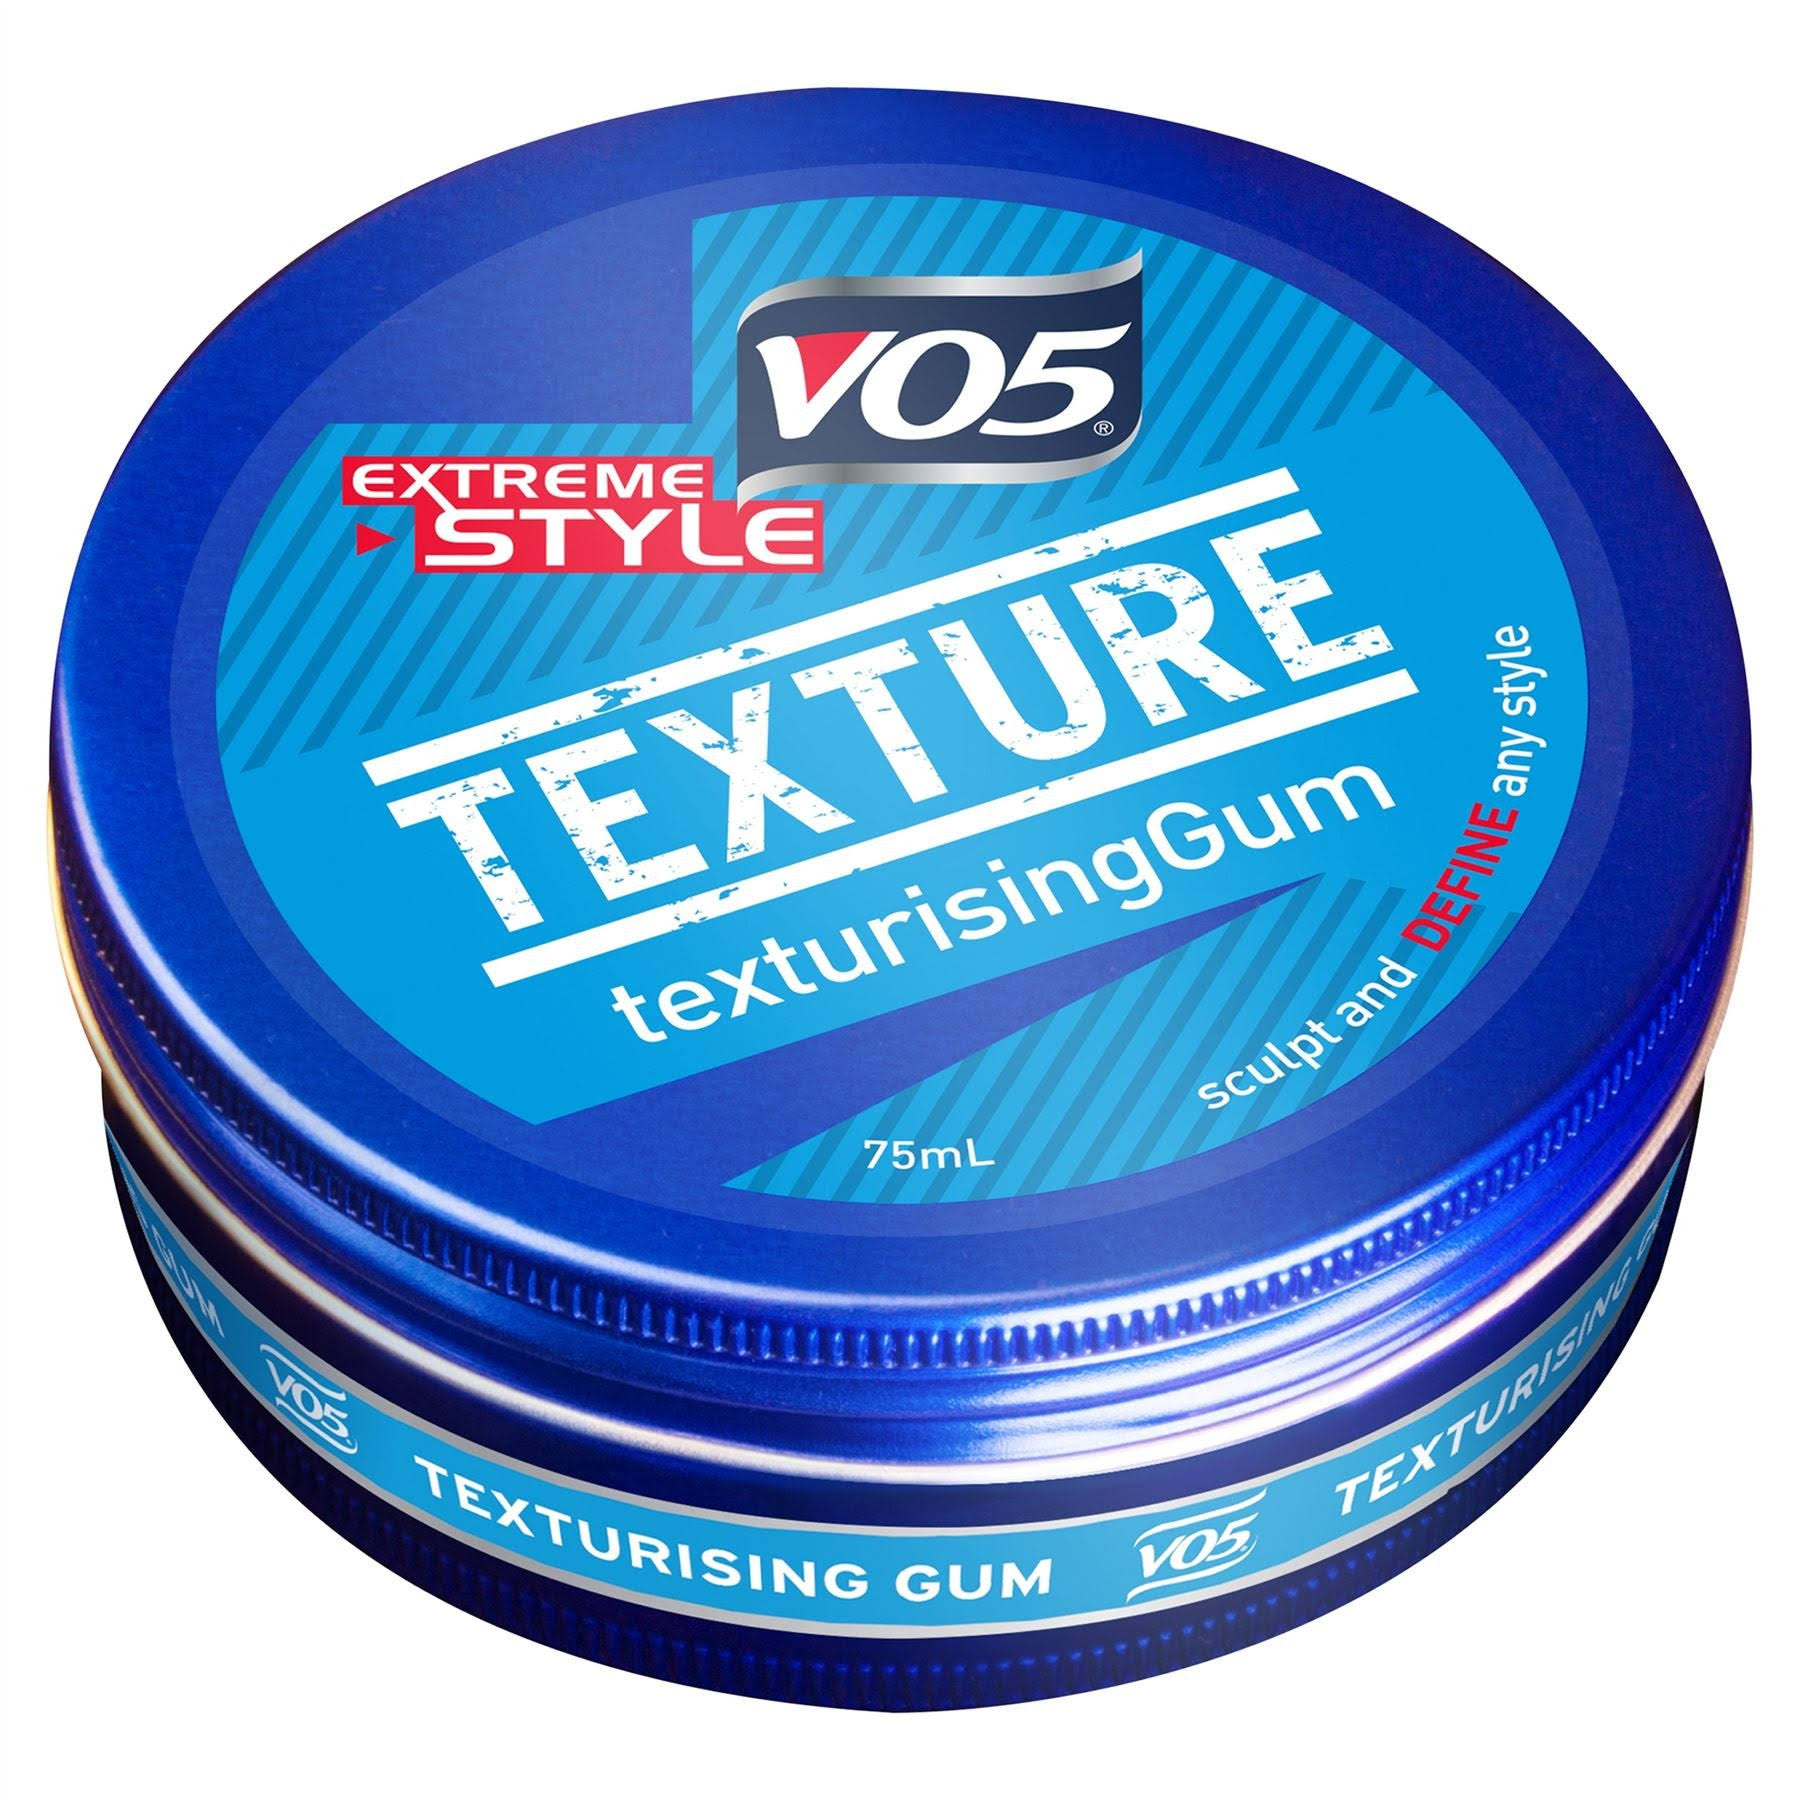 V05 Extreme Style Texturising Gum